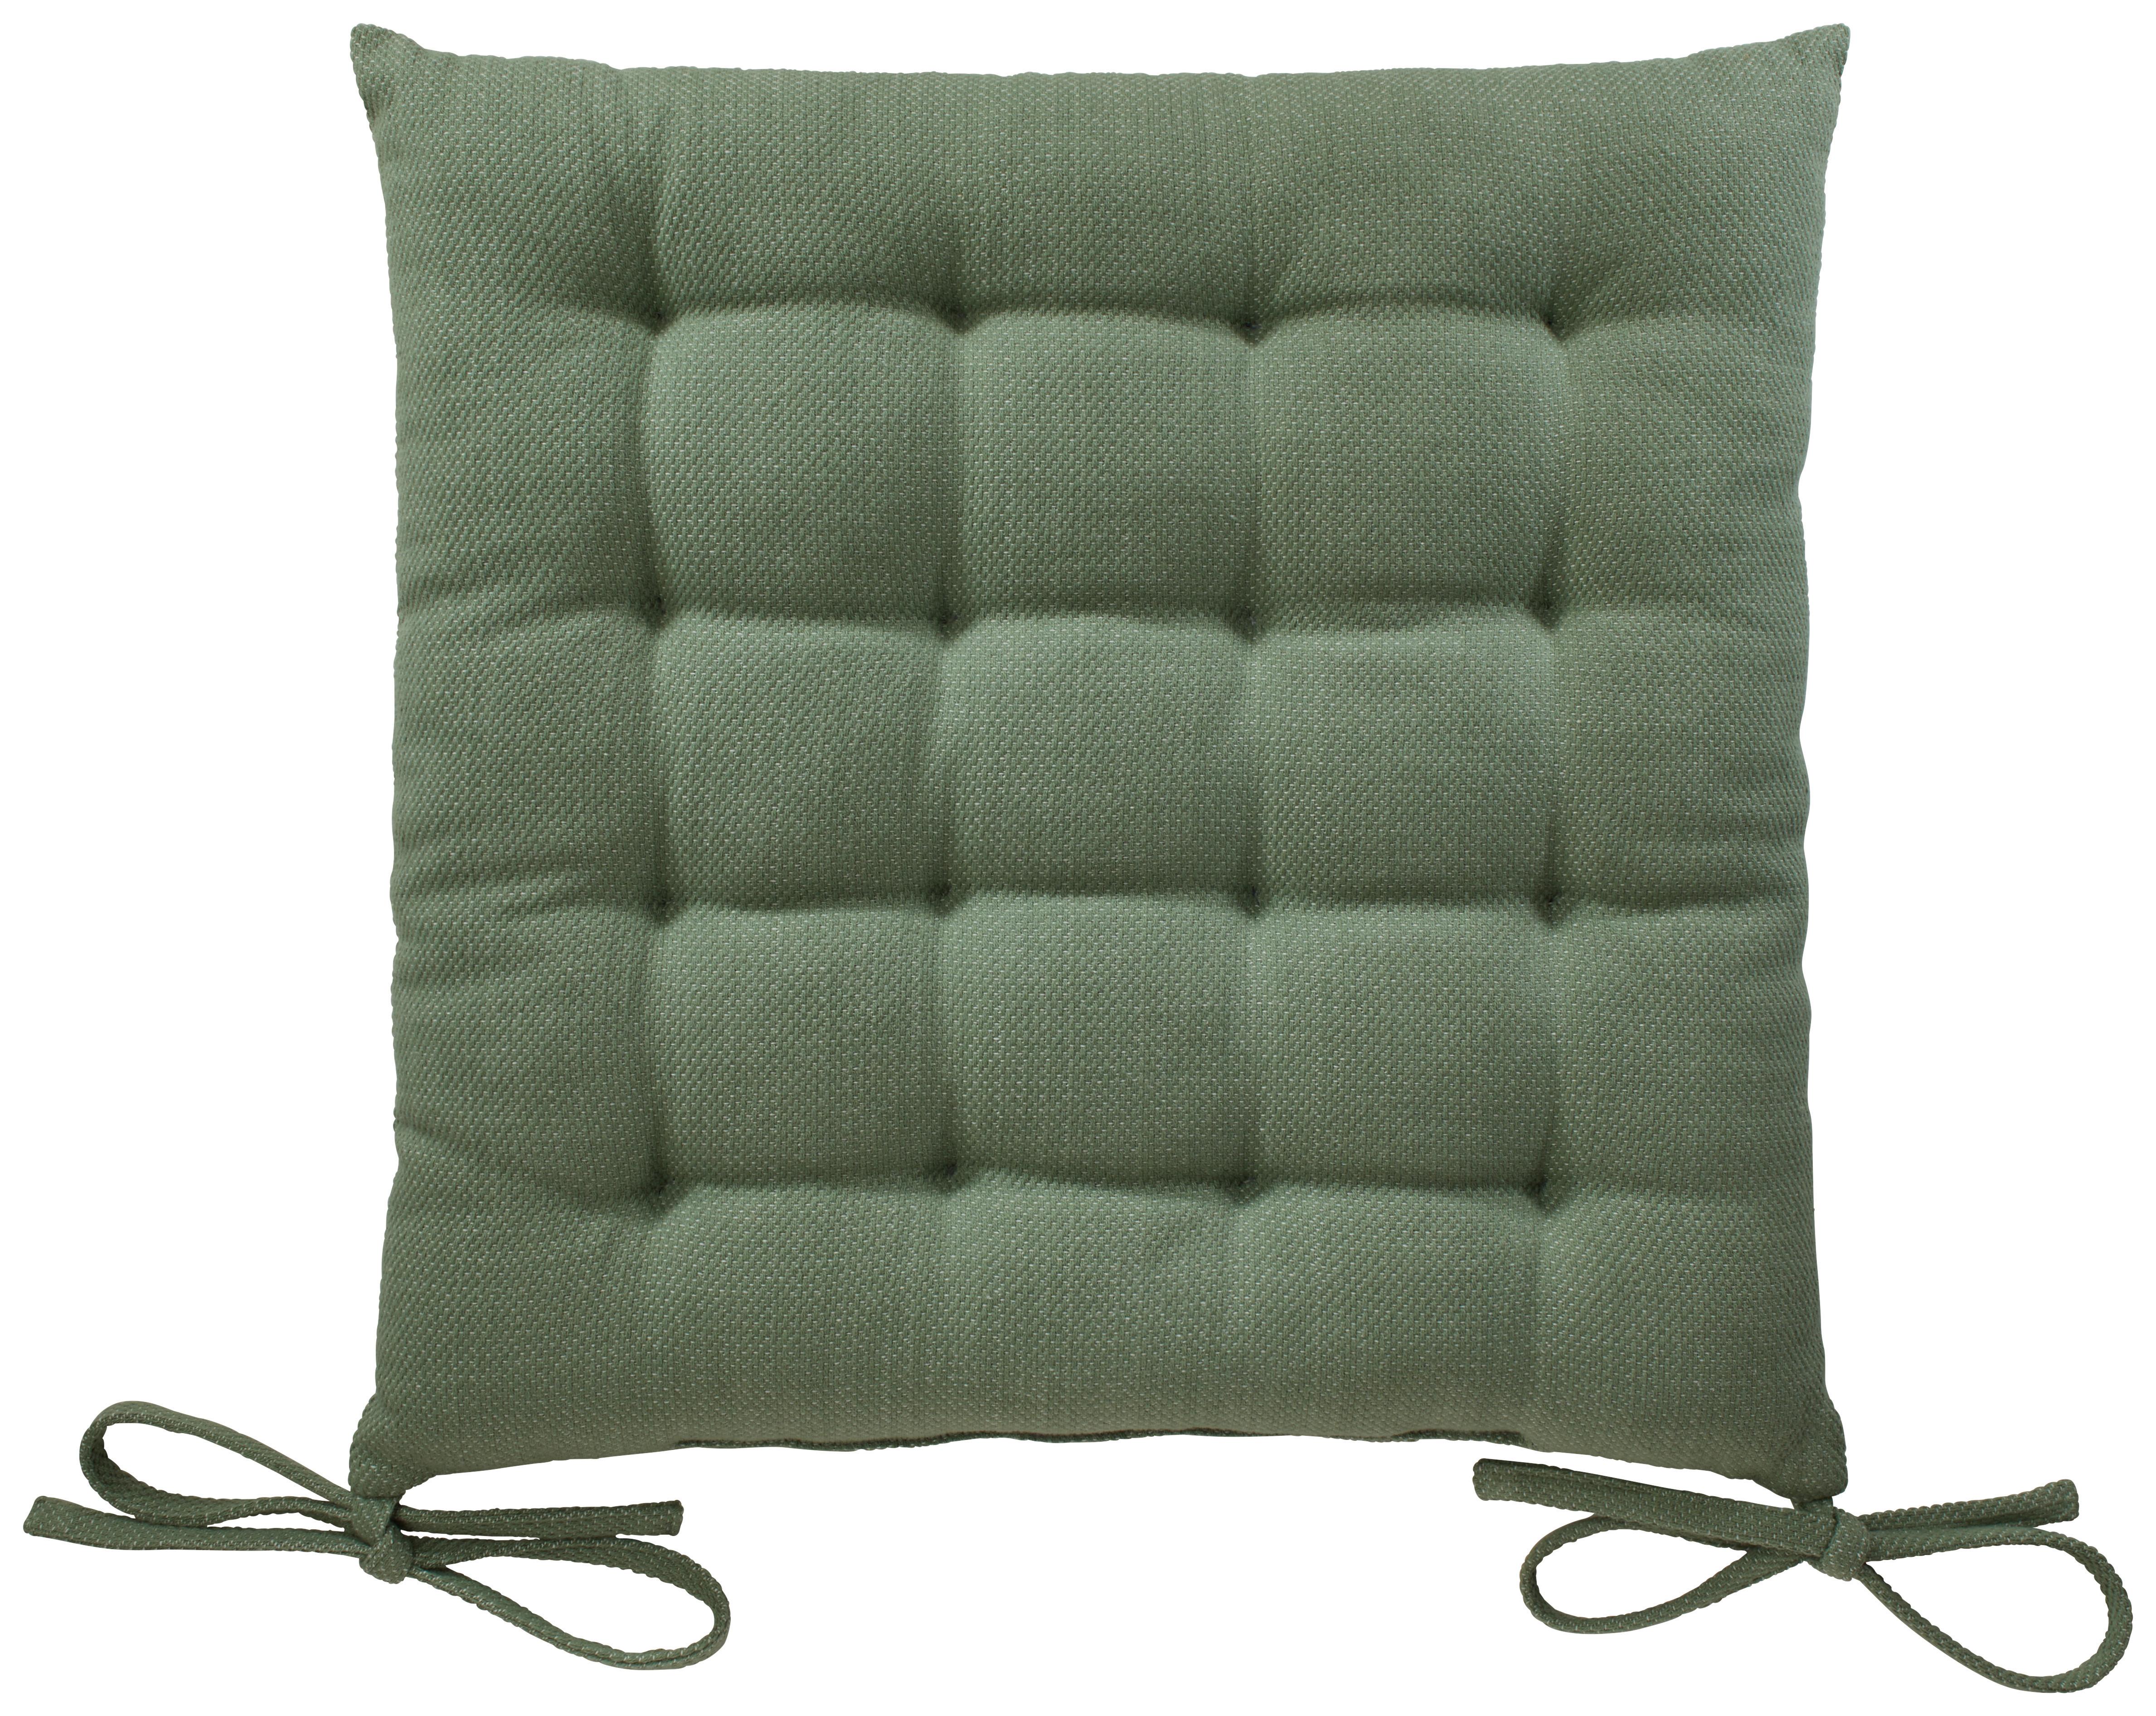 Sedežna Blazina Chris - zelena, Moderno, tekstil (40/40cm) - Premium Living